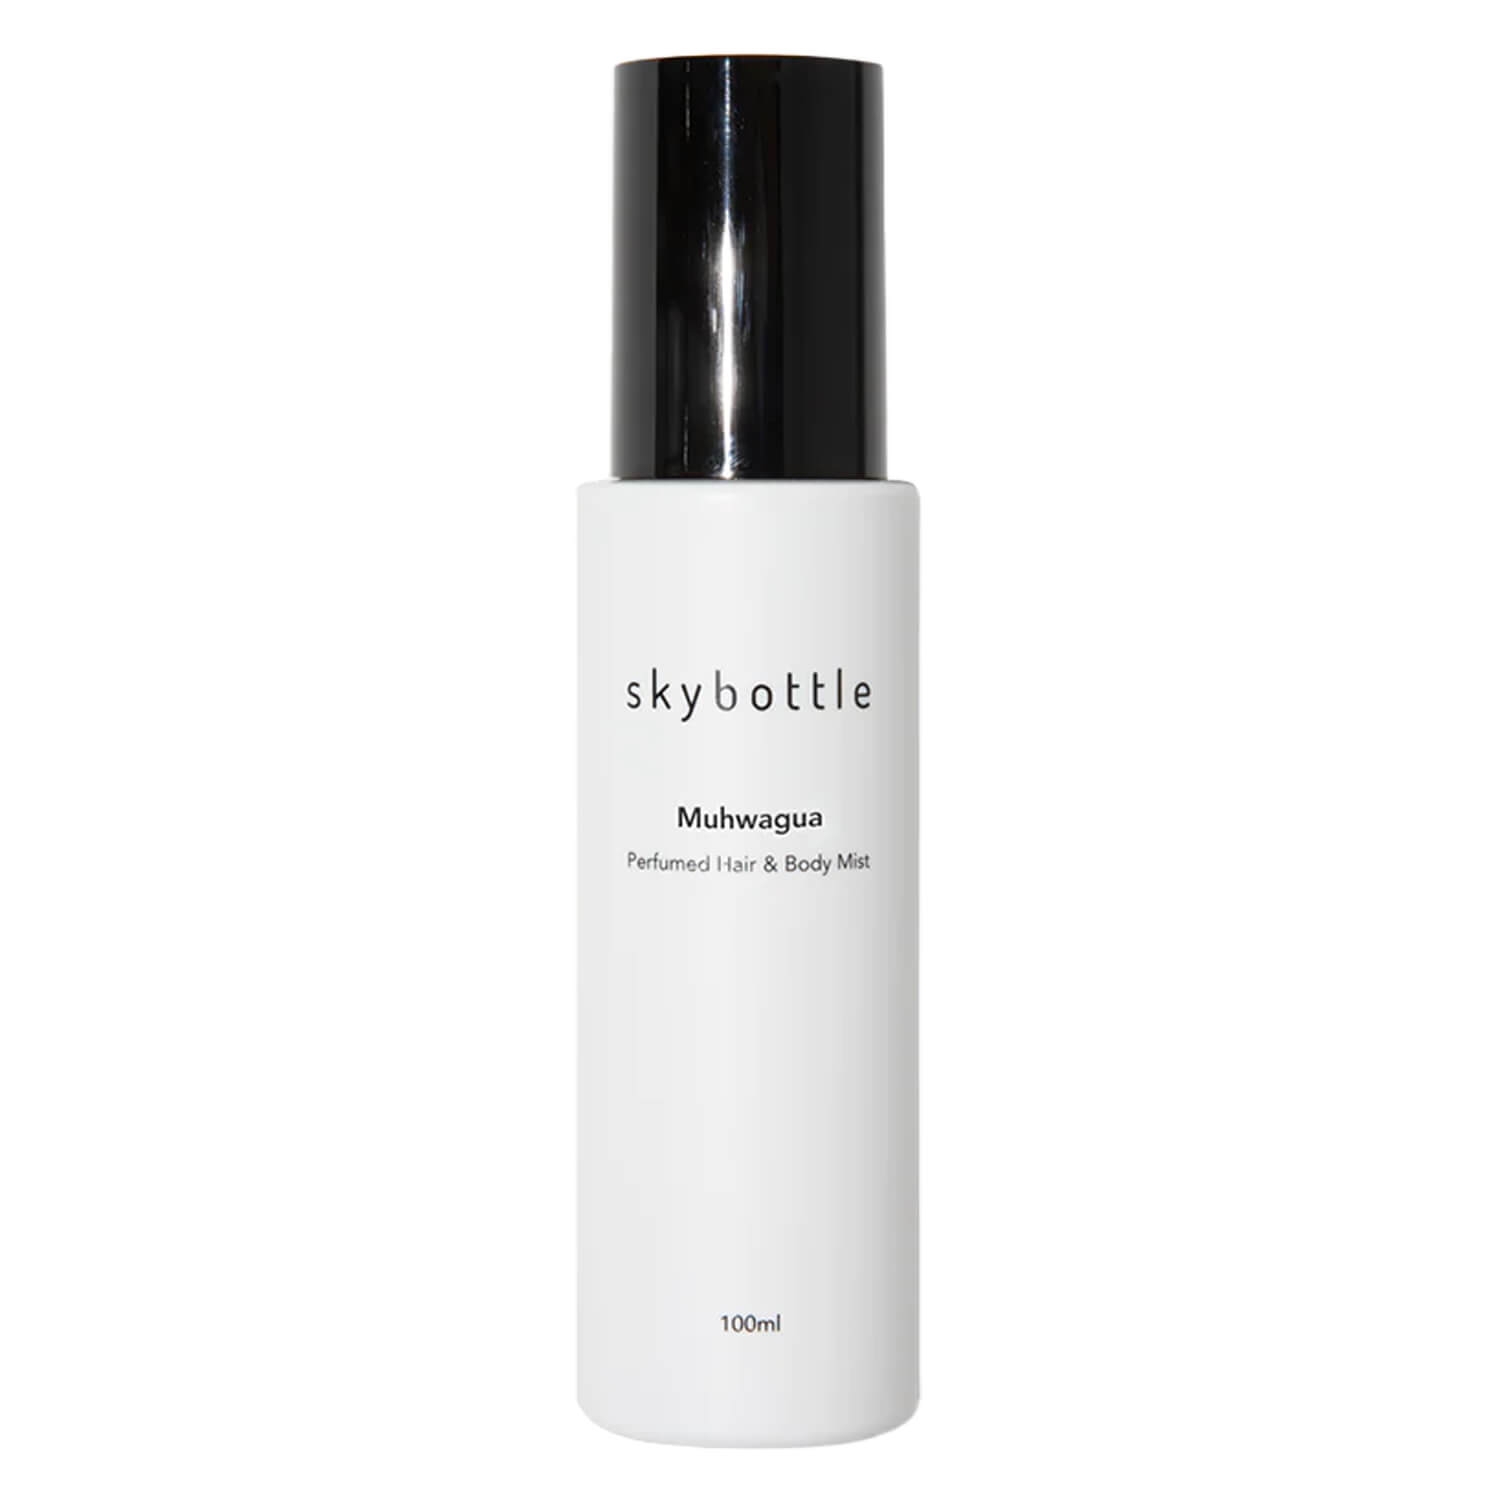 Produktbild von Skybottle - Muhwagua Perfumed Hair & Body Mist